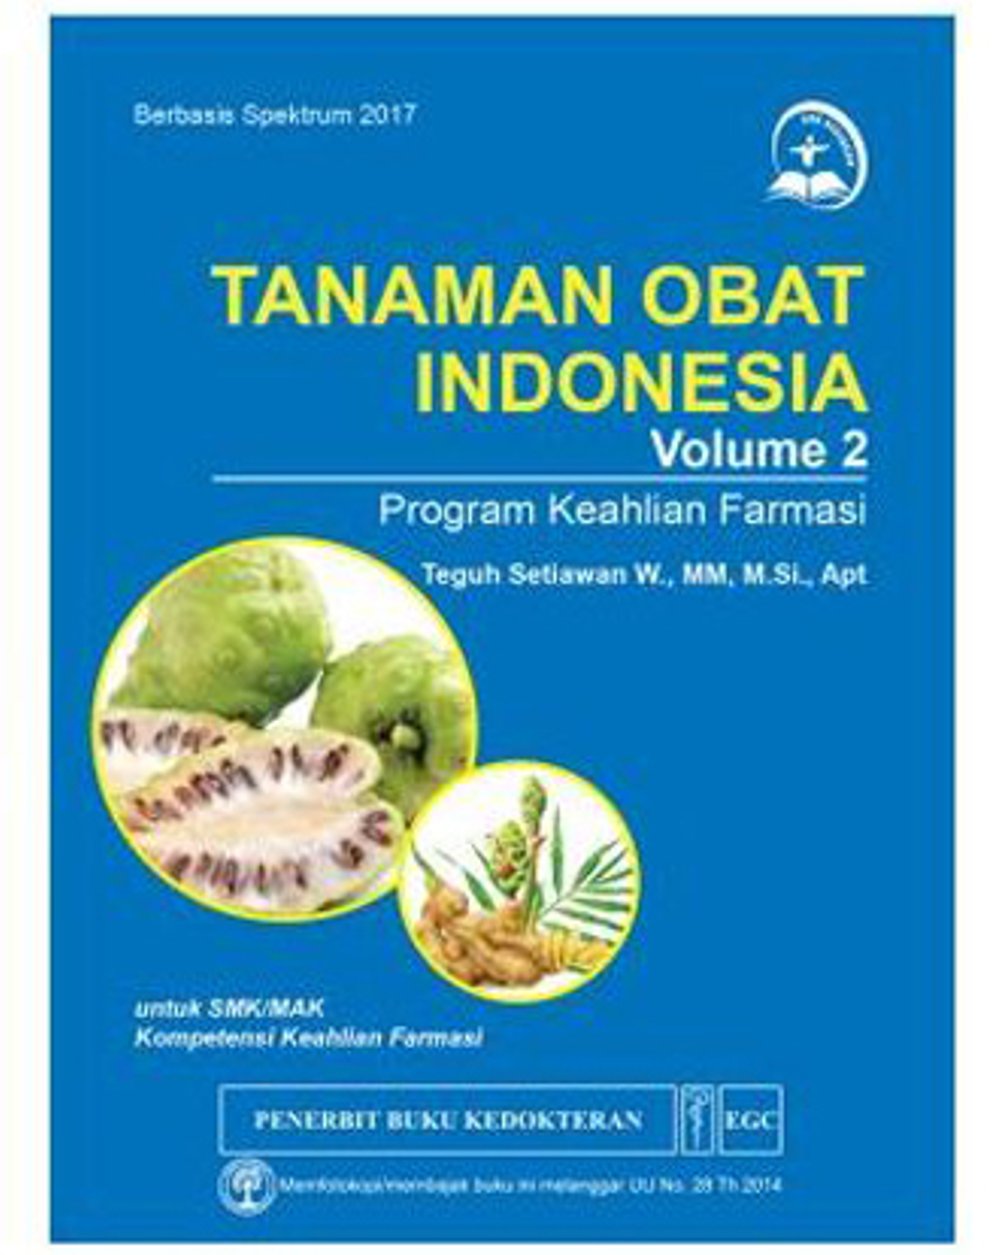 Tanaman Obat Indonesia : Program Keahlian Farmasi Vol. 2